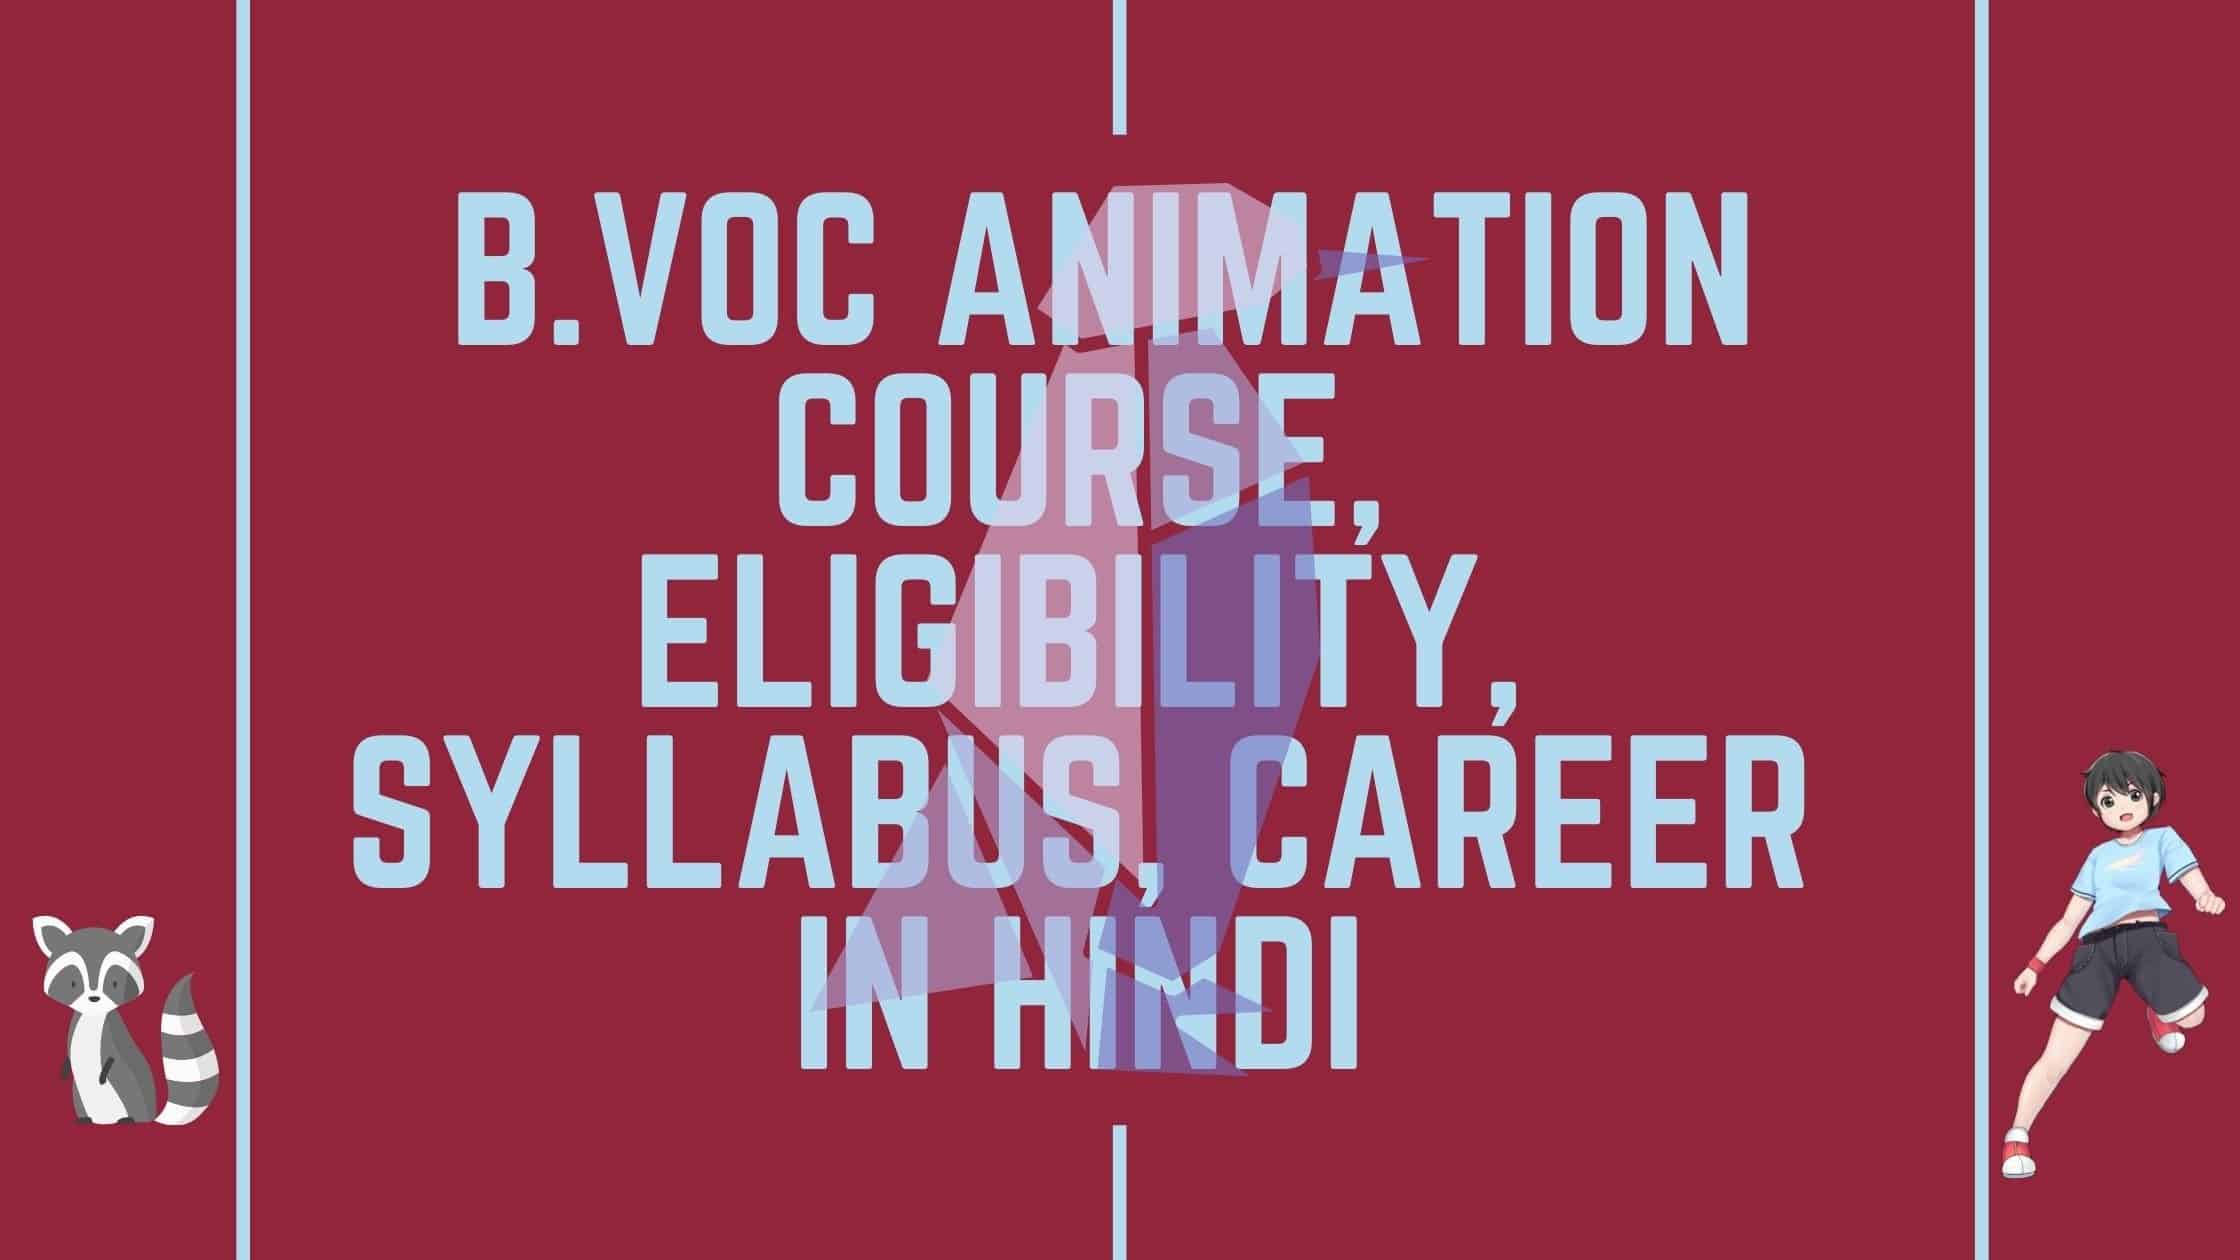  Animation course, Eligibility, Syllabus, Career in Hindi -   जानकारी अब हिंदी में